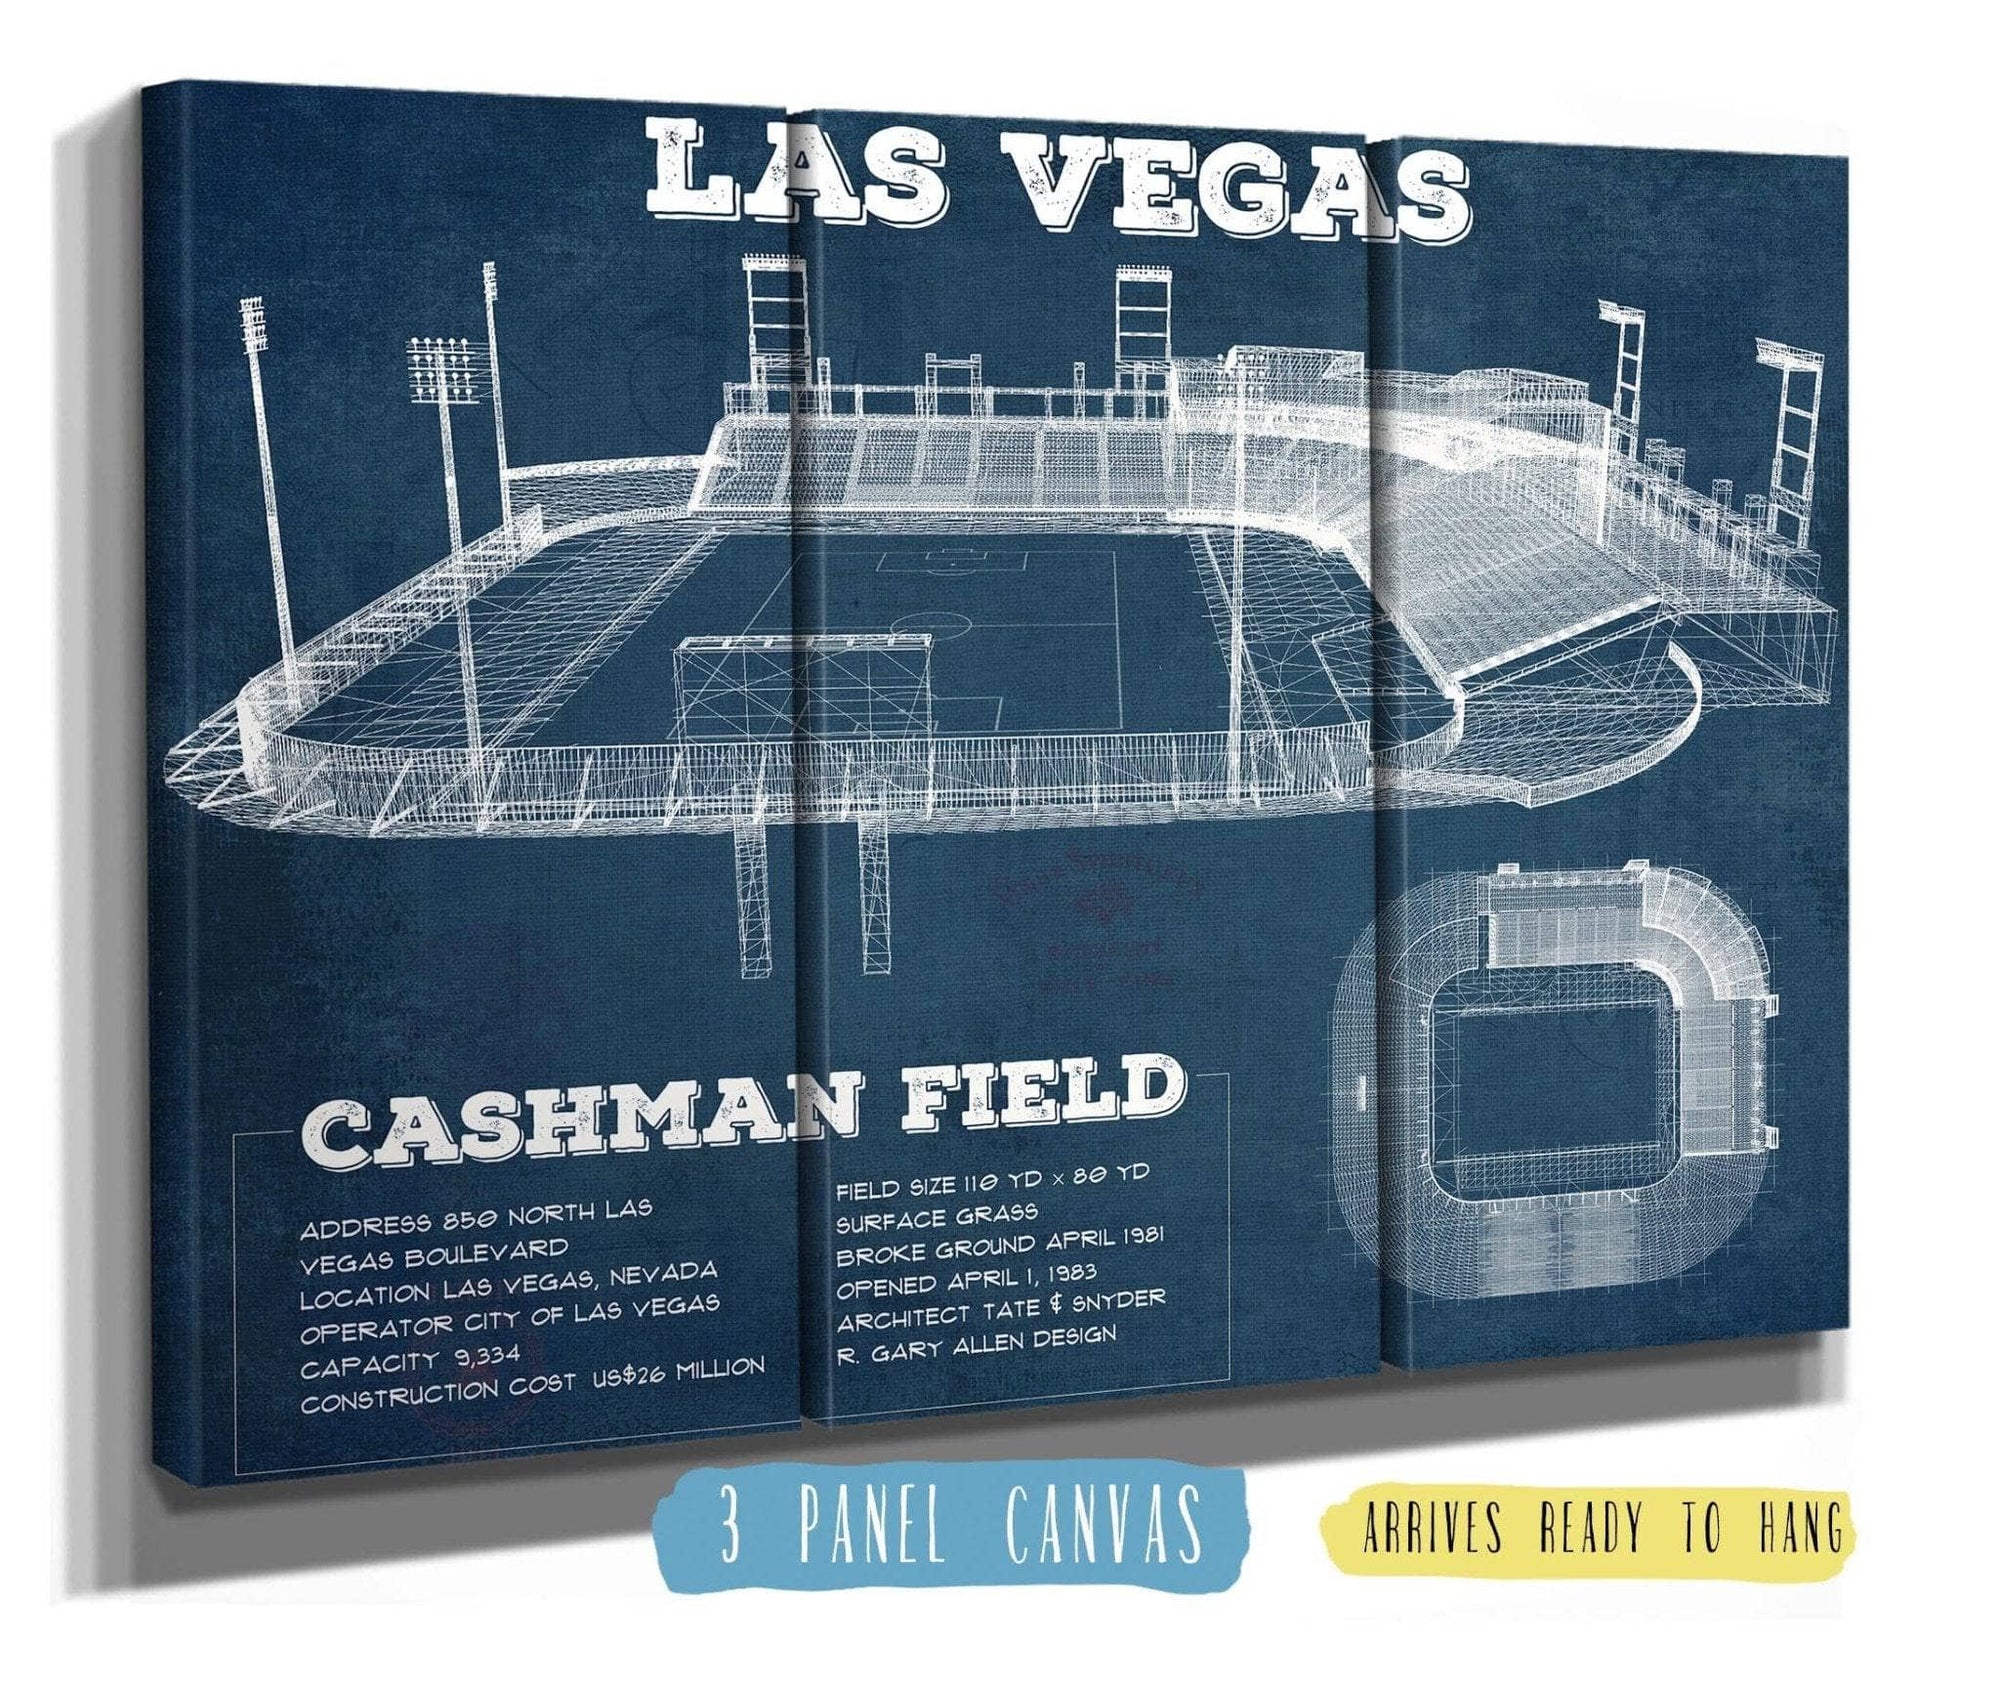 Cutler West Las Vegas Lights- Vintage Cashman Field MLS Soccer Print